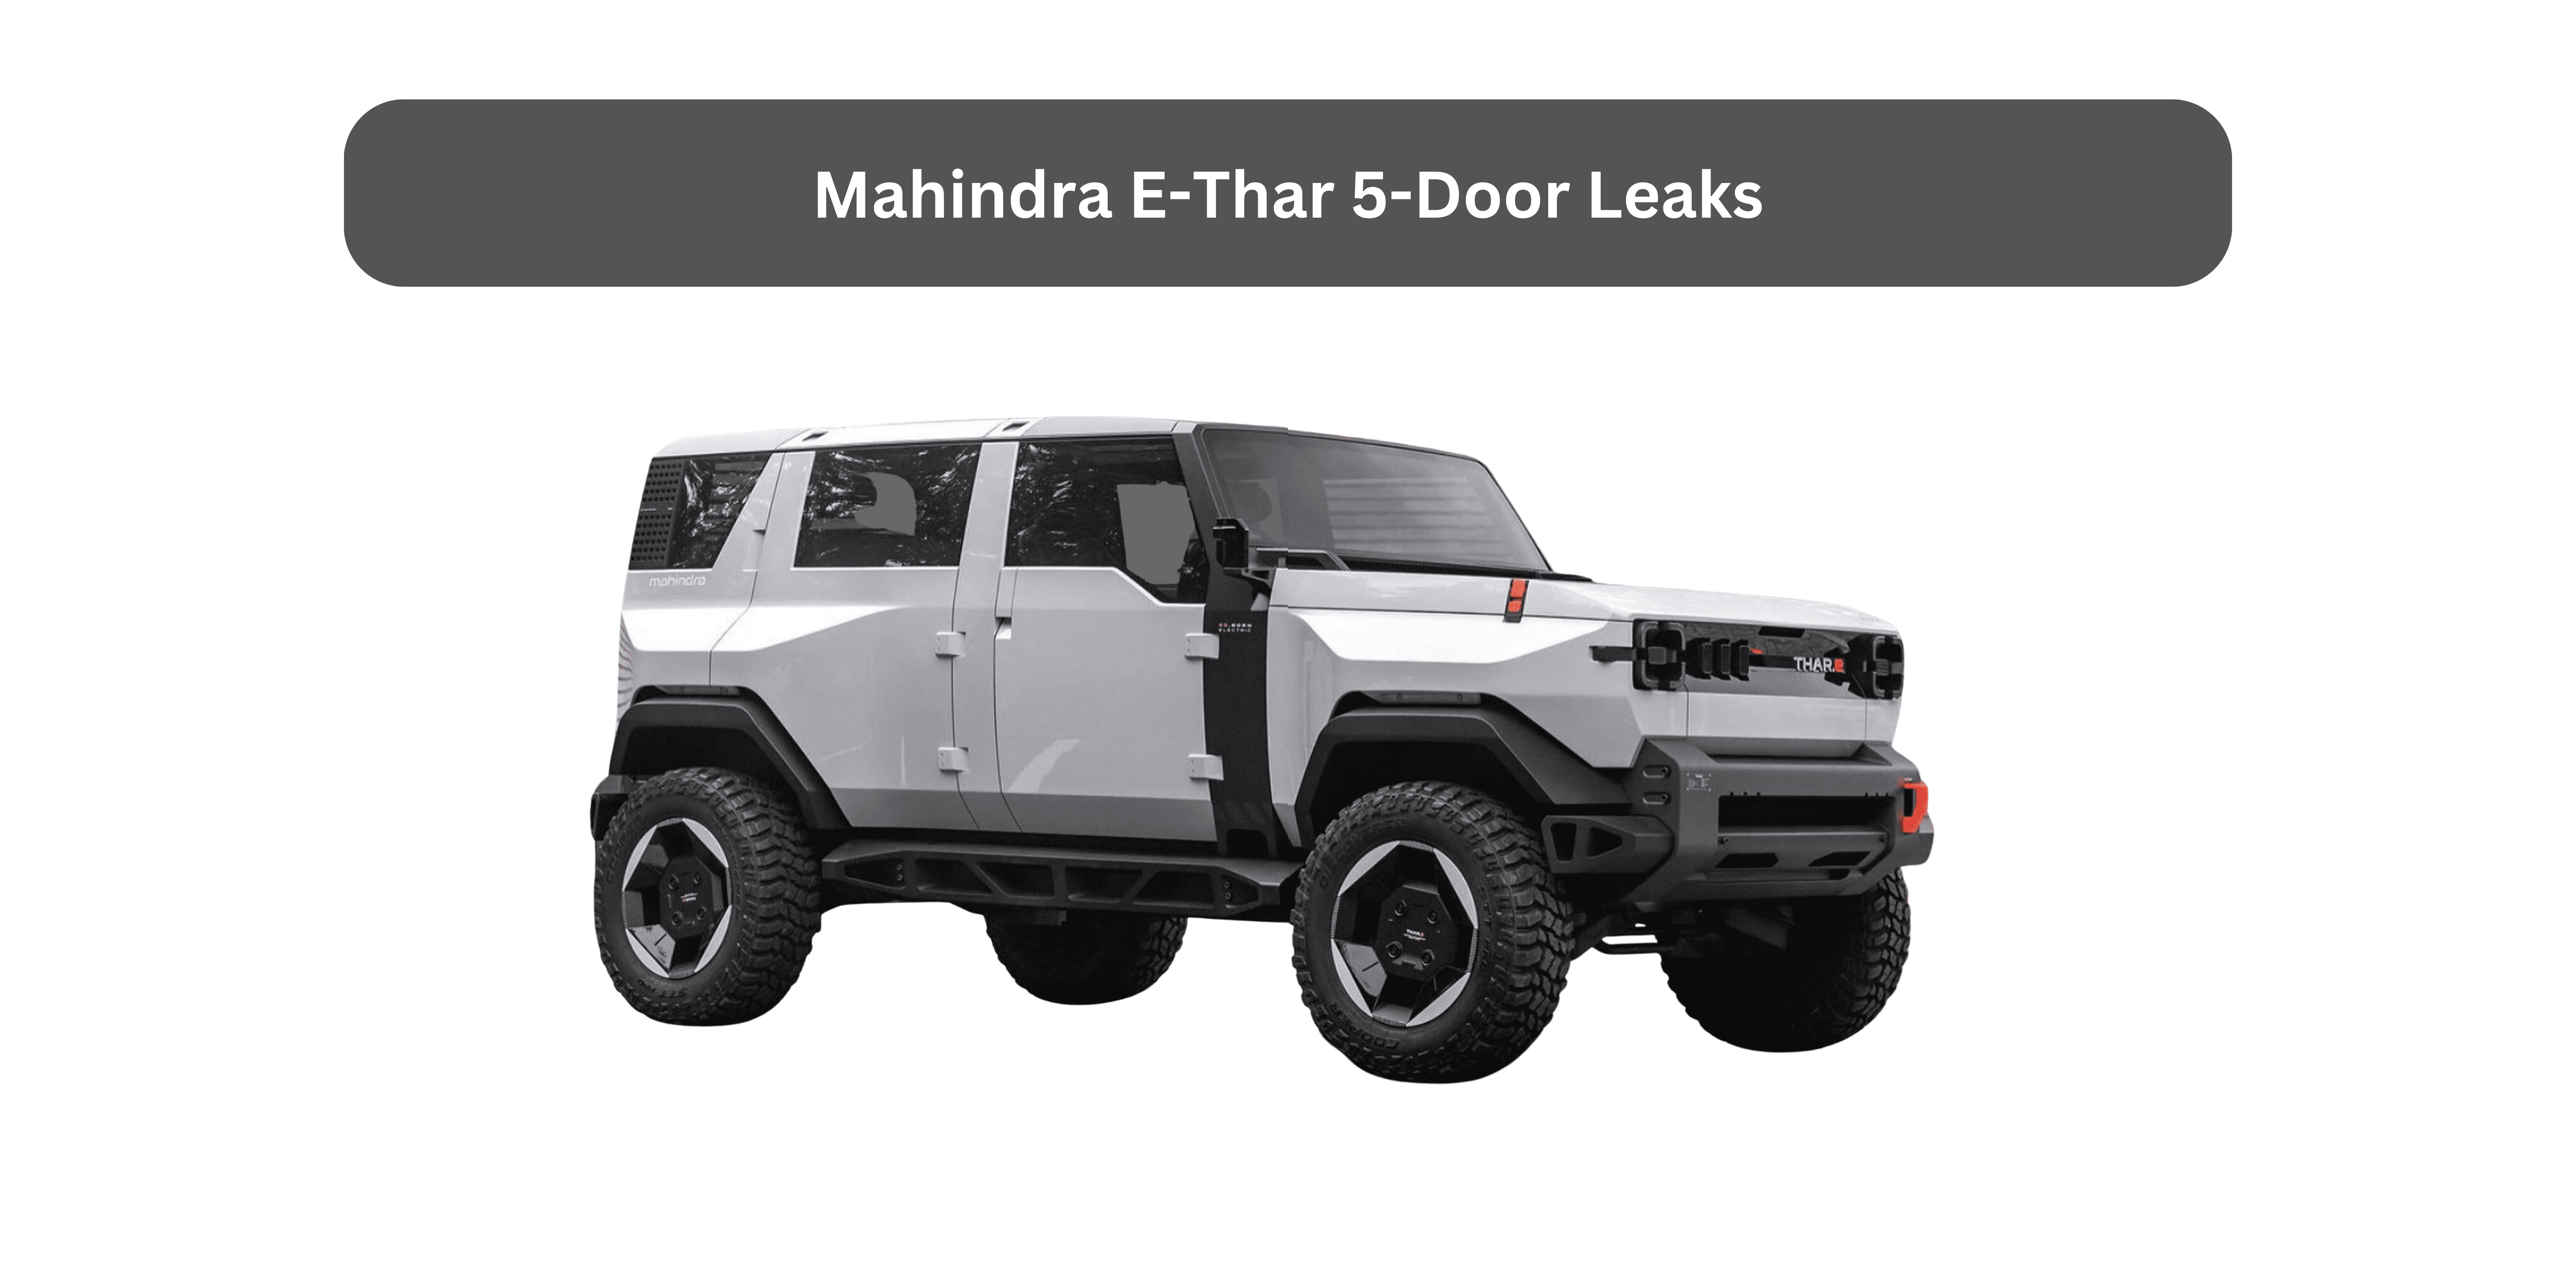 Mahindra E-Thar 5-Door Leaks